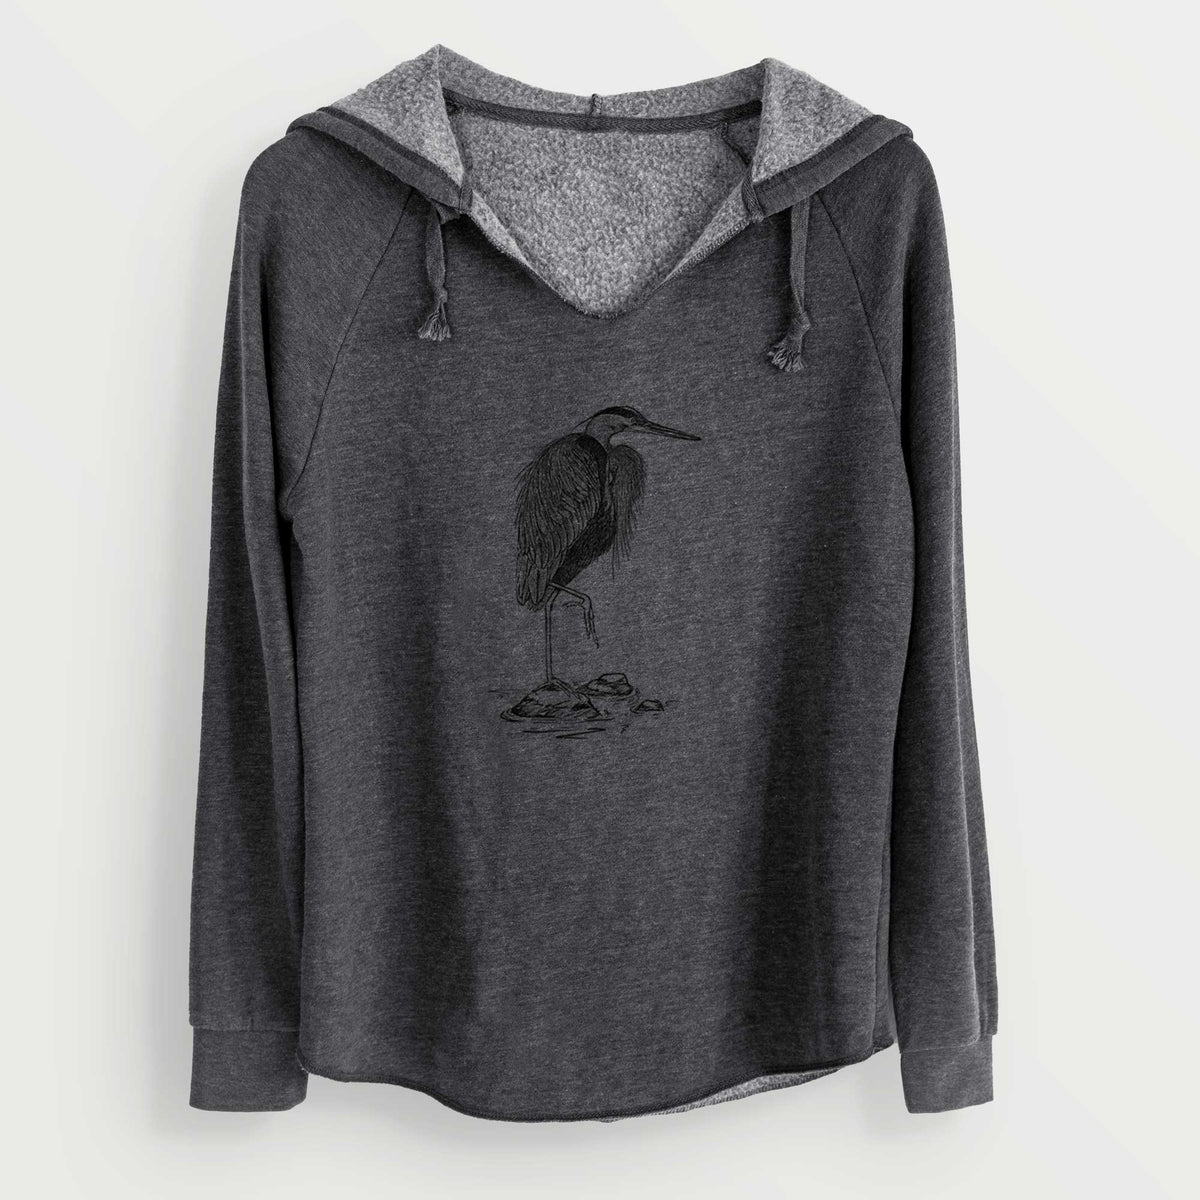 Ardea herodias - Great Blue Heron - Cali Wave Hooded Sweatshirt